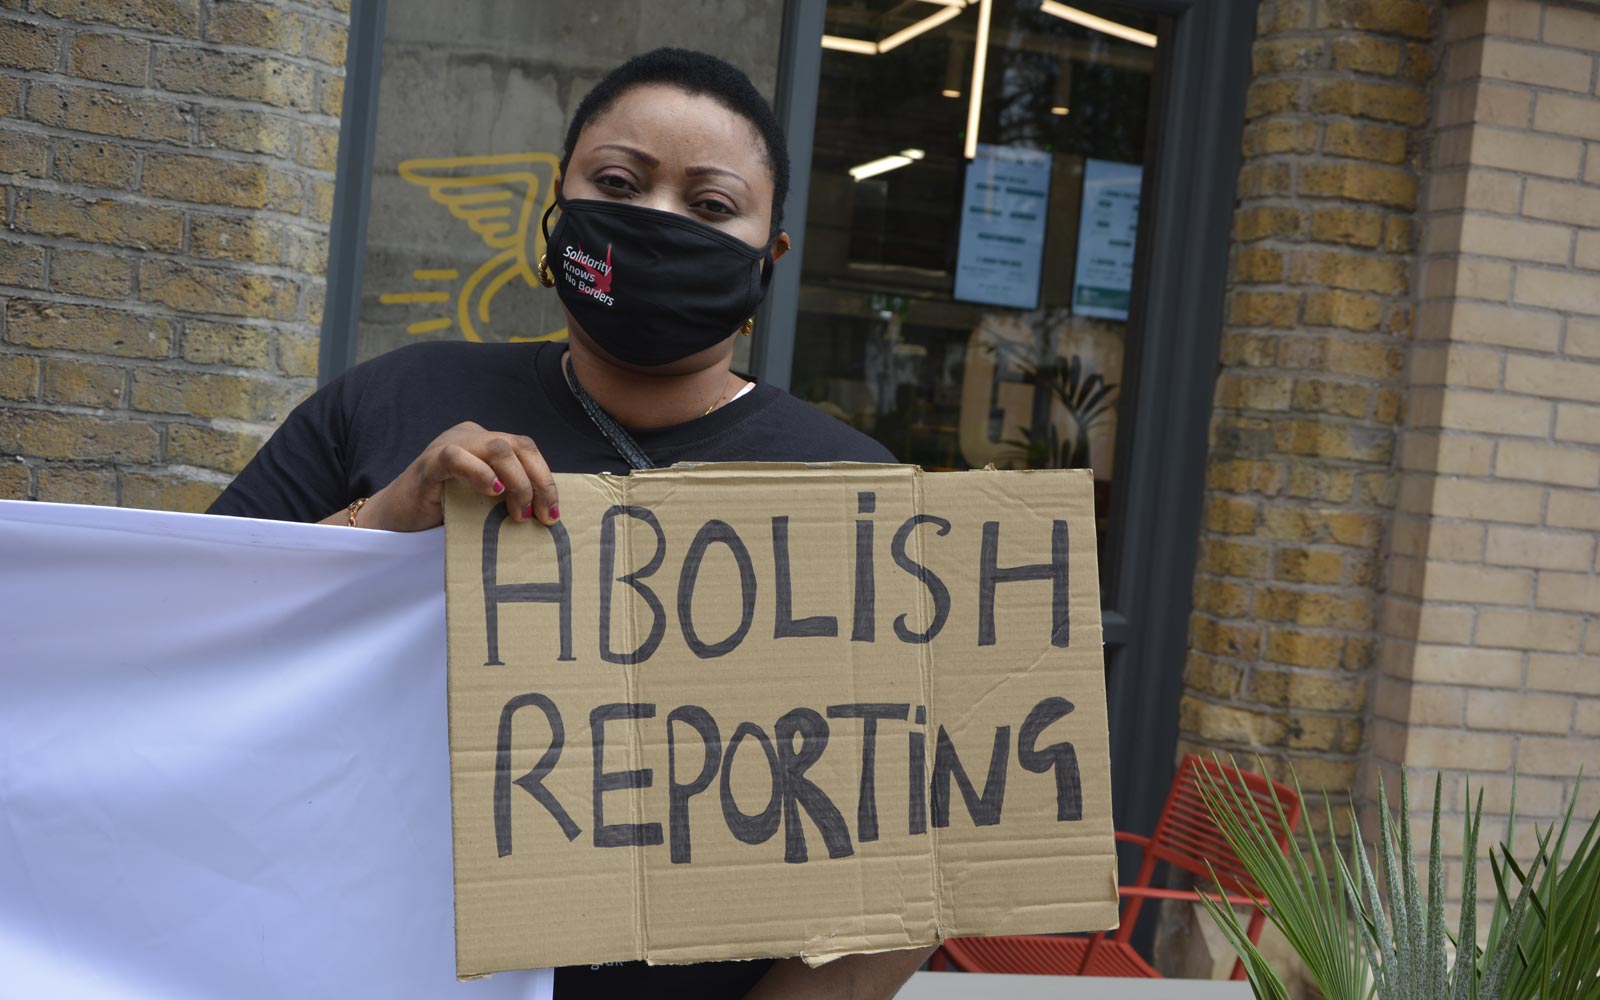 Abolish Reporting